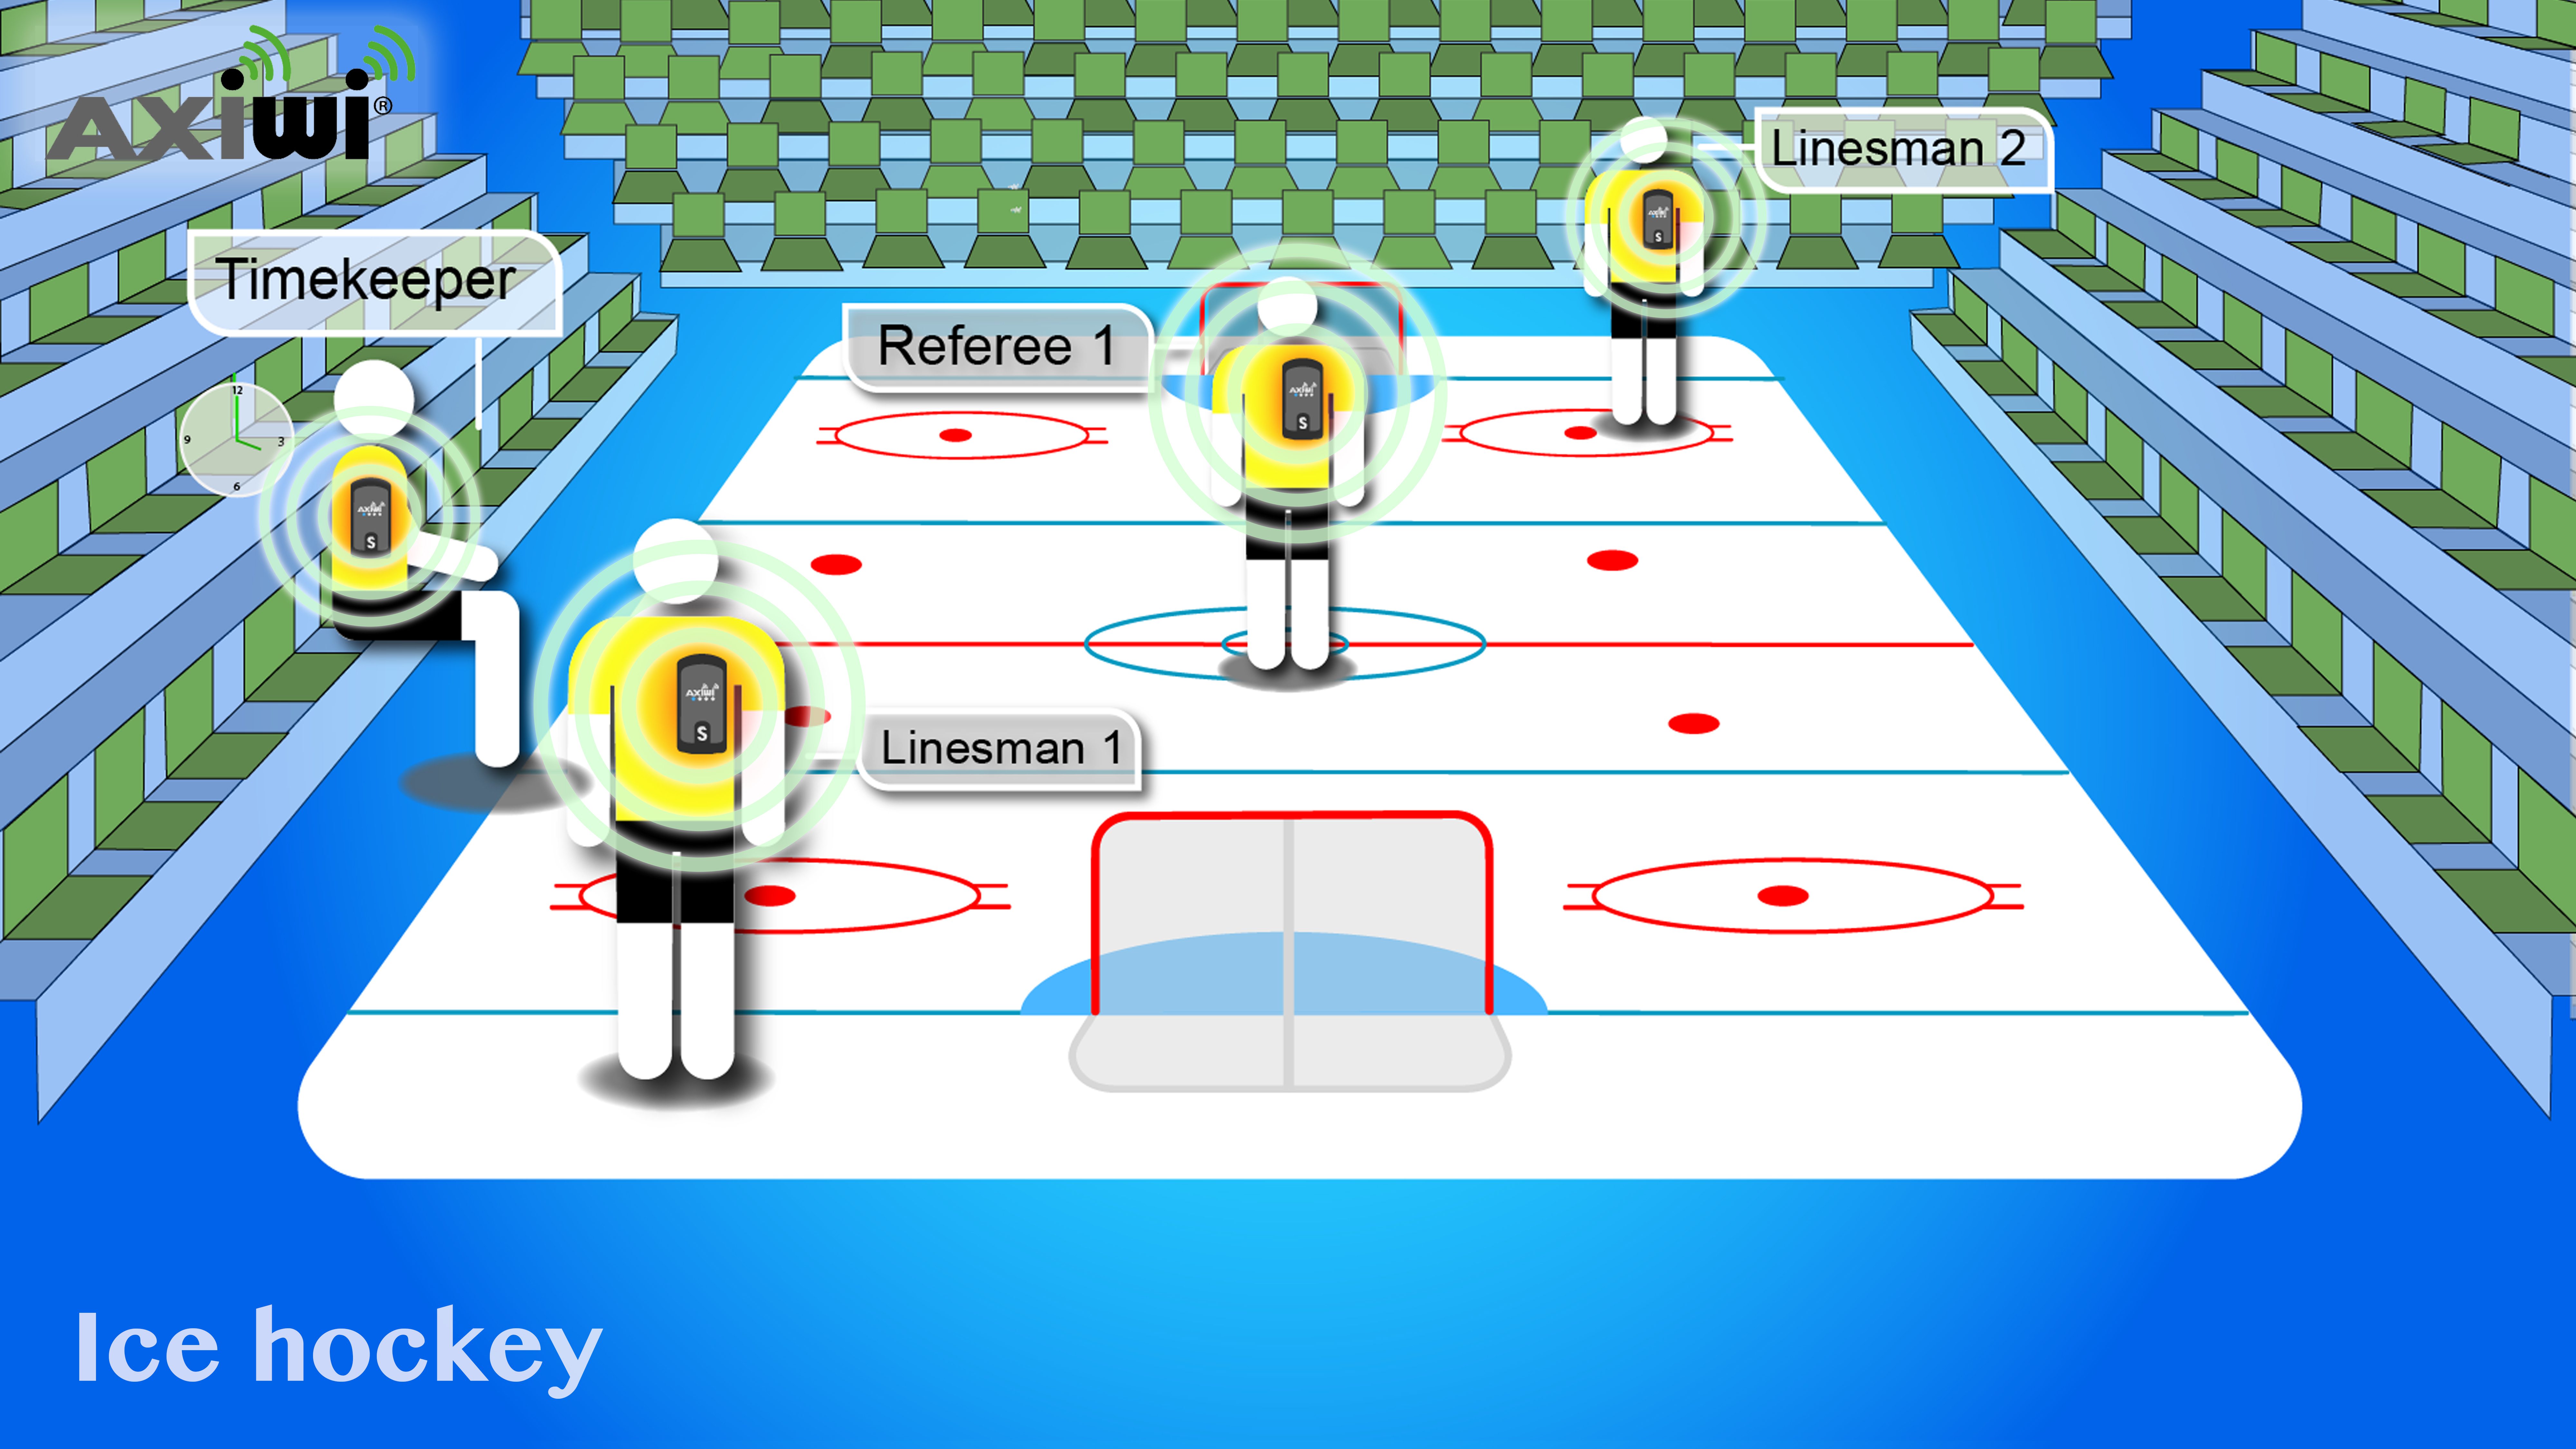 axiwi-communication-system-referee-ice-hockey